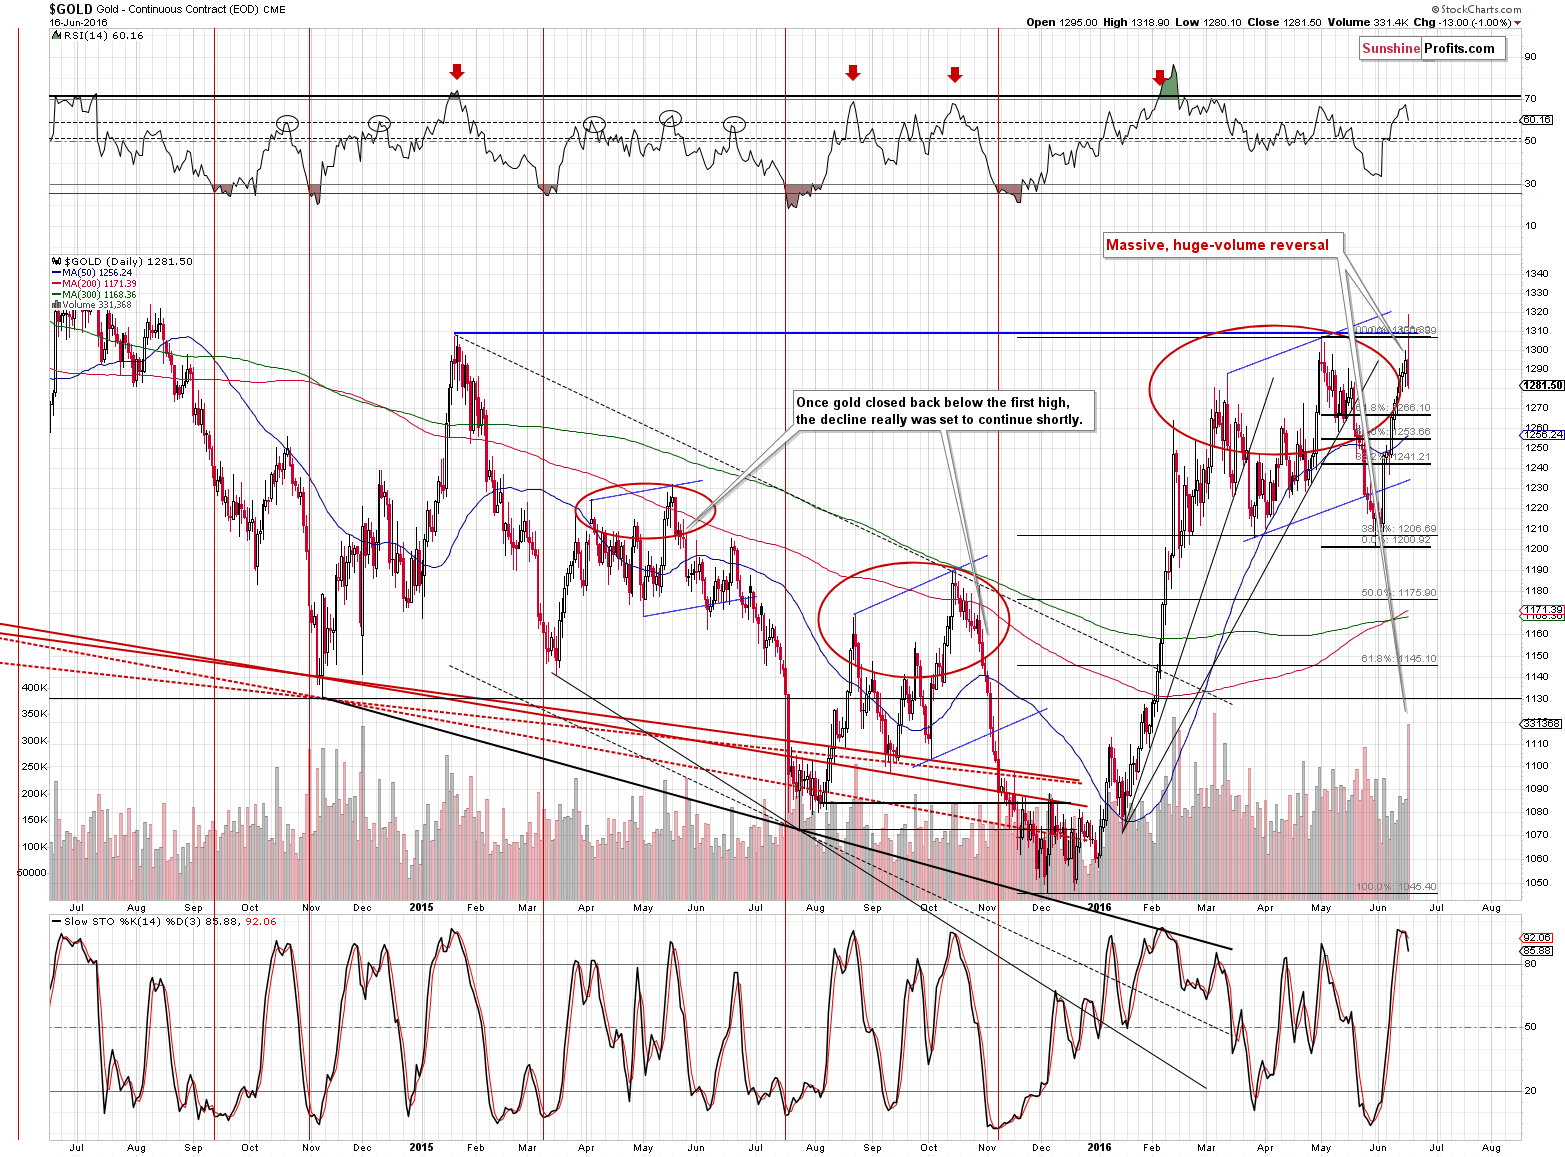 Short-term Gold price chart - Gold spot price